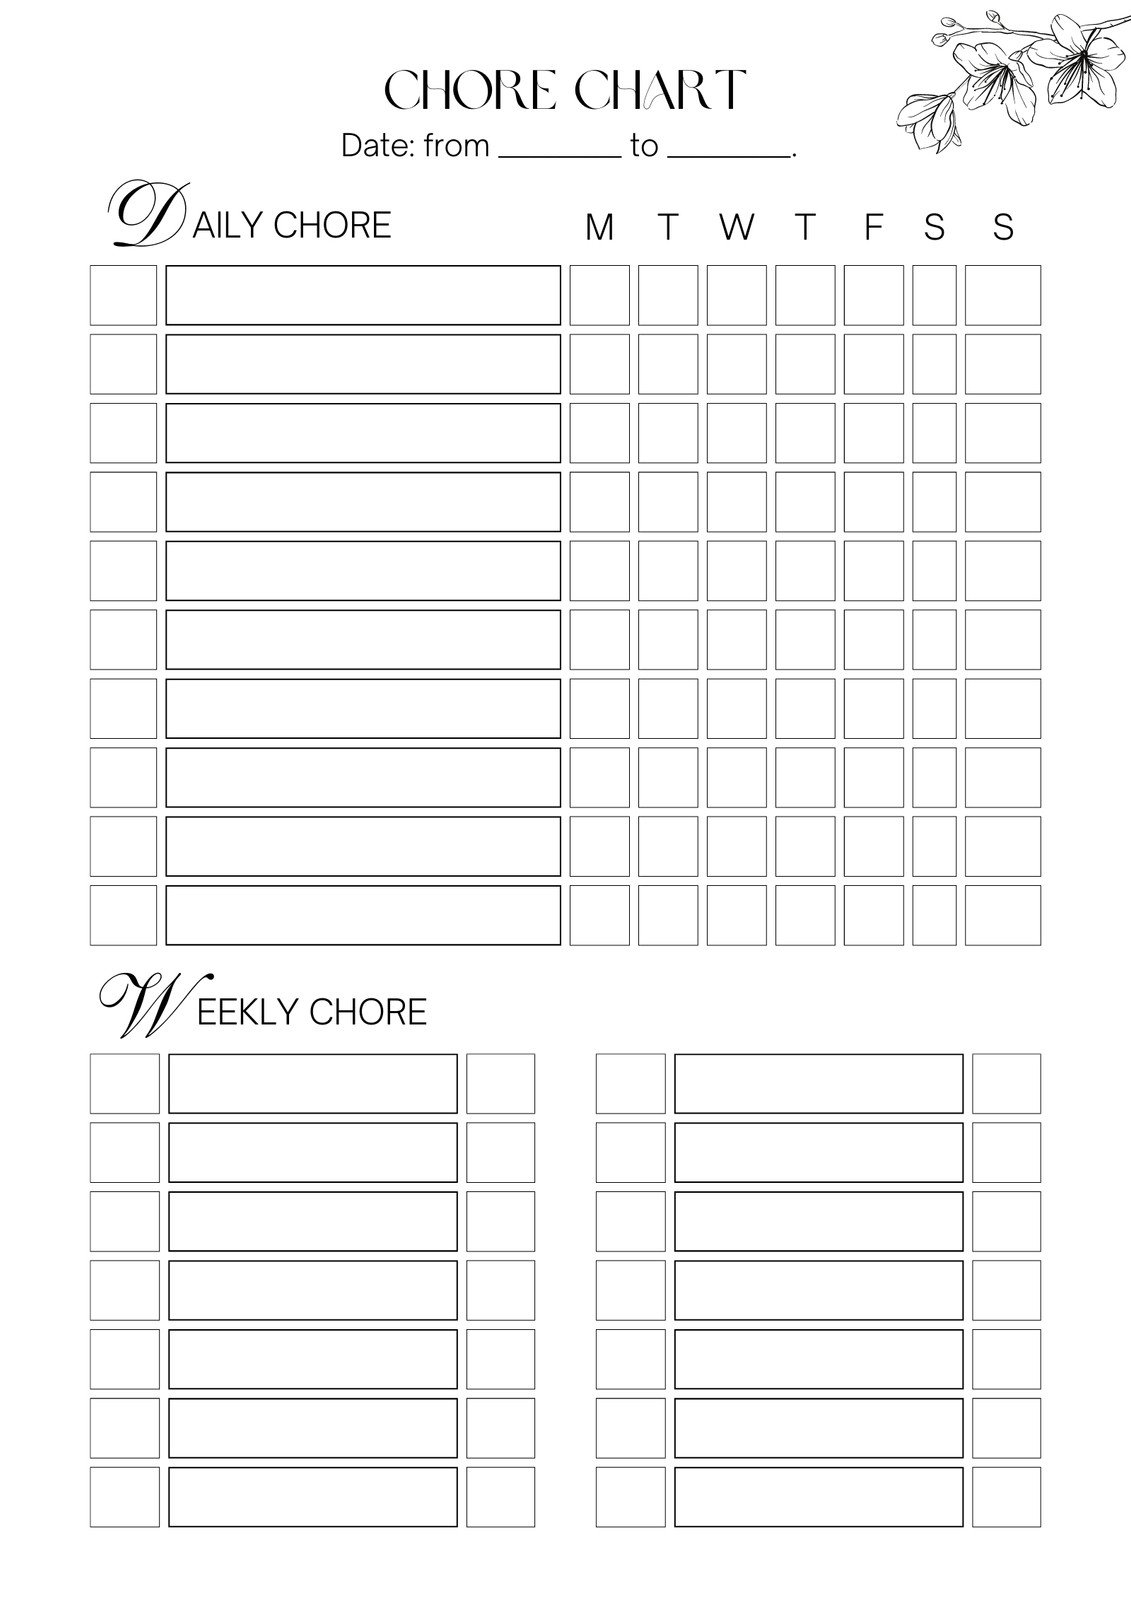 Free Customizable Chore Chart Templates To Print Canva - Free Printable Chore List